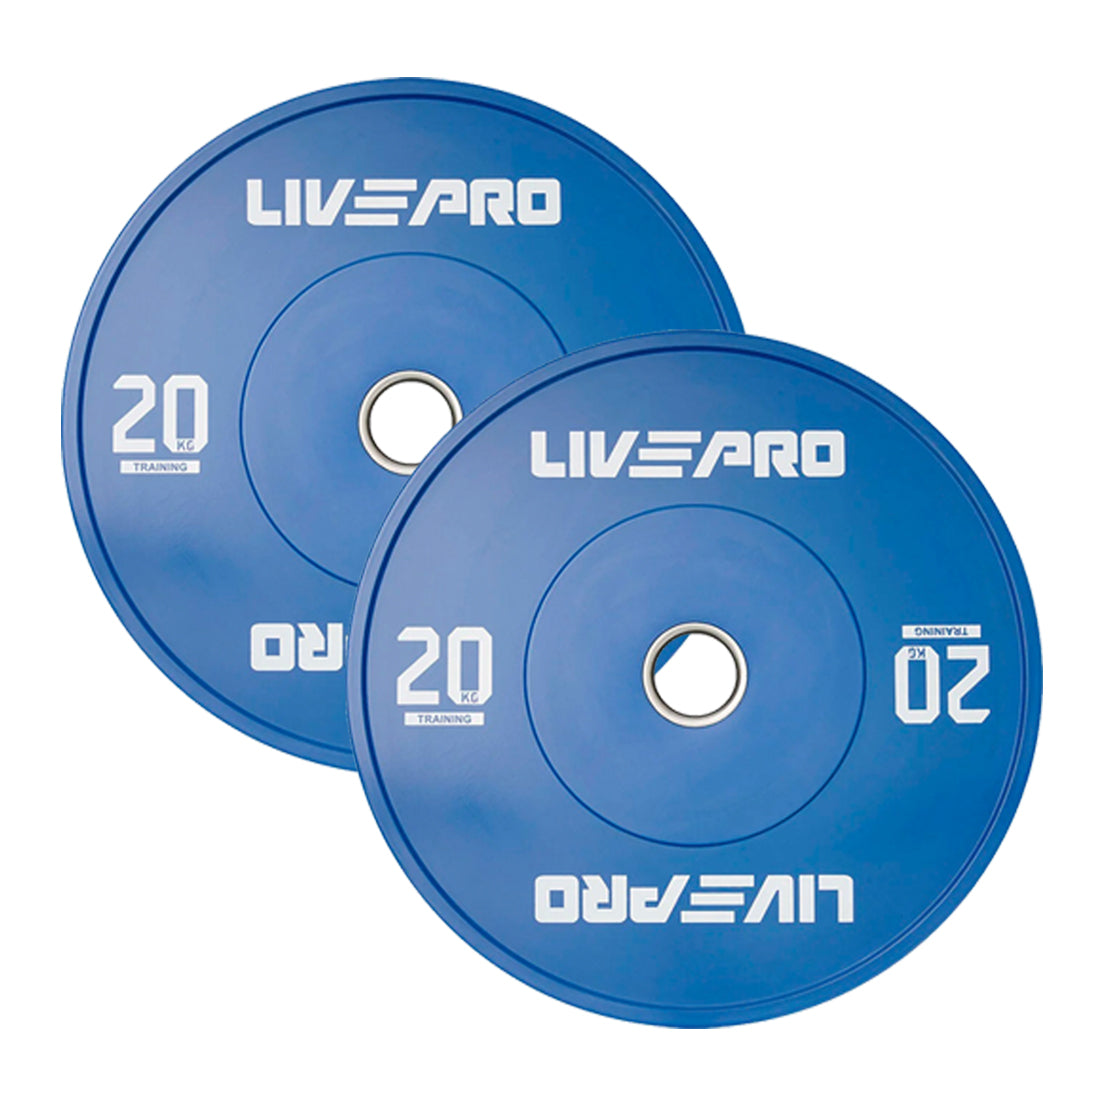 Livepro Rubber Colored Bumper Plates 20kg - Sold as Pair